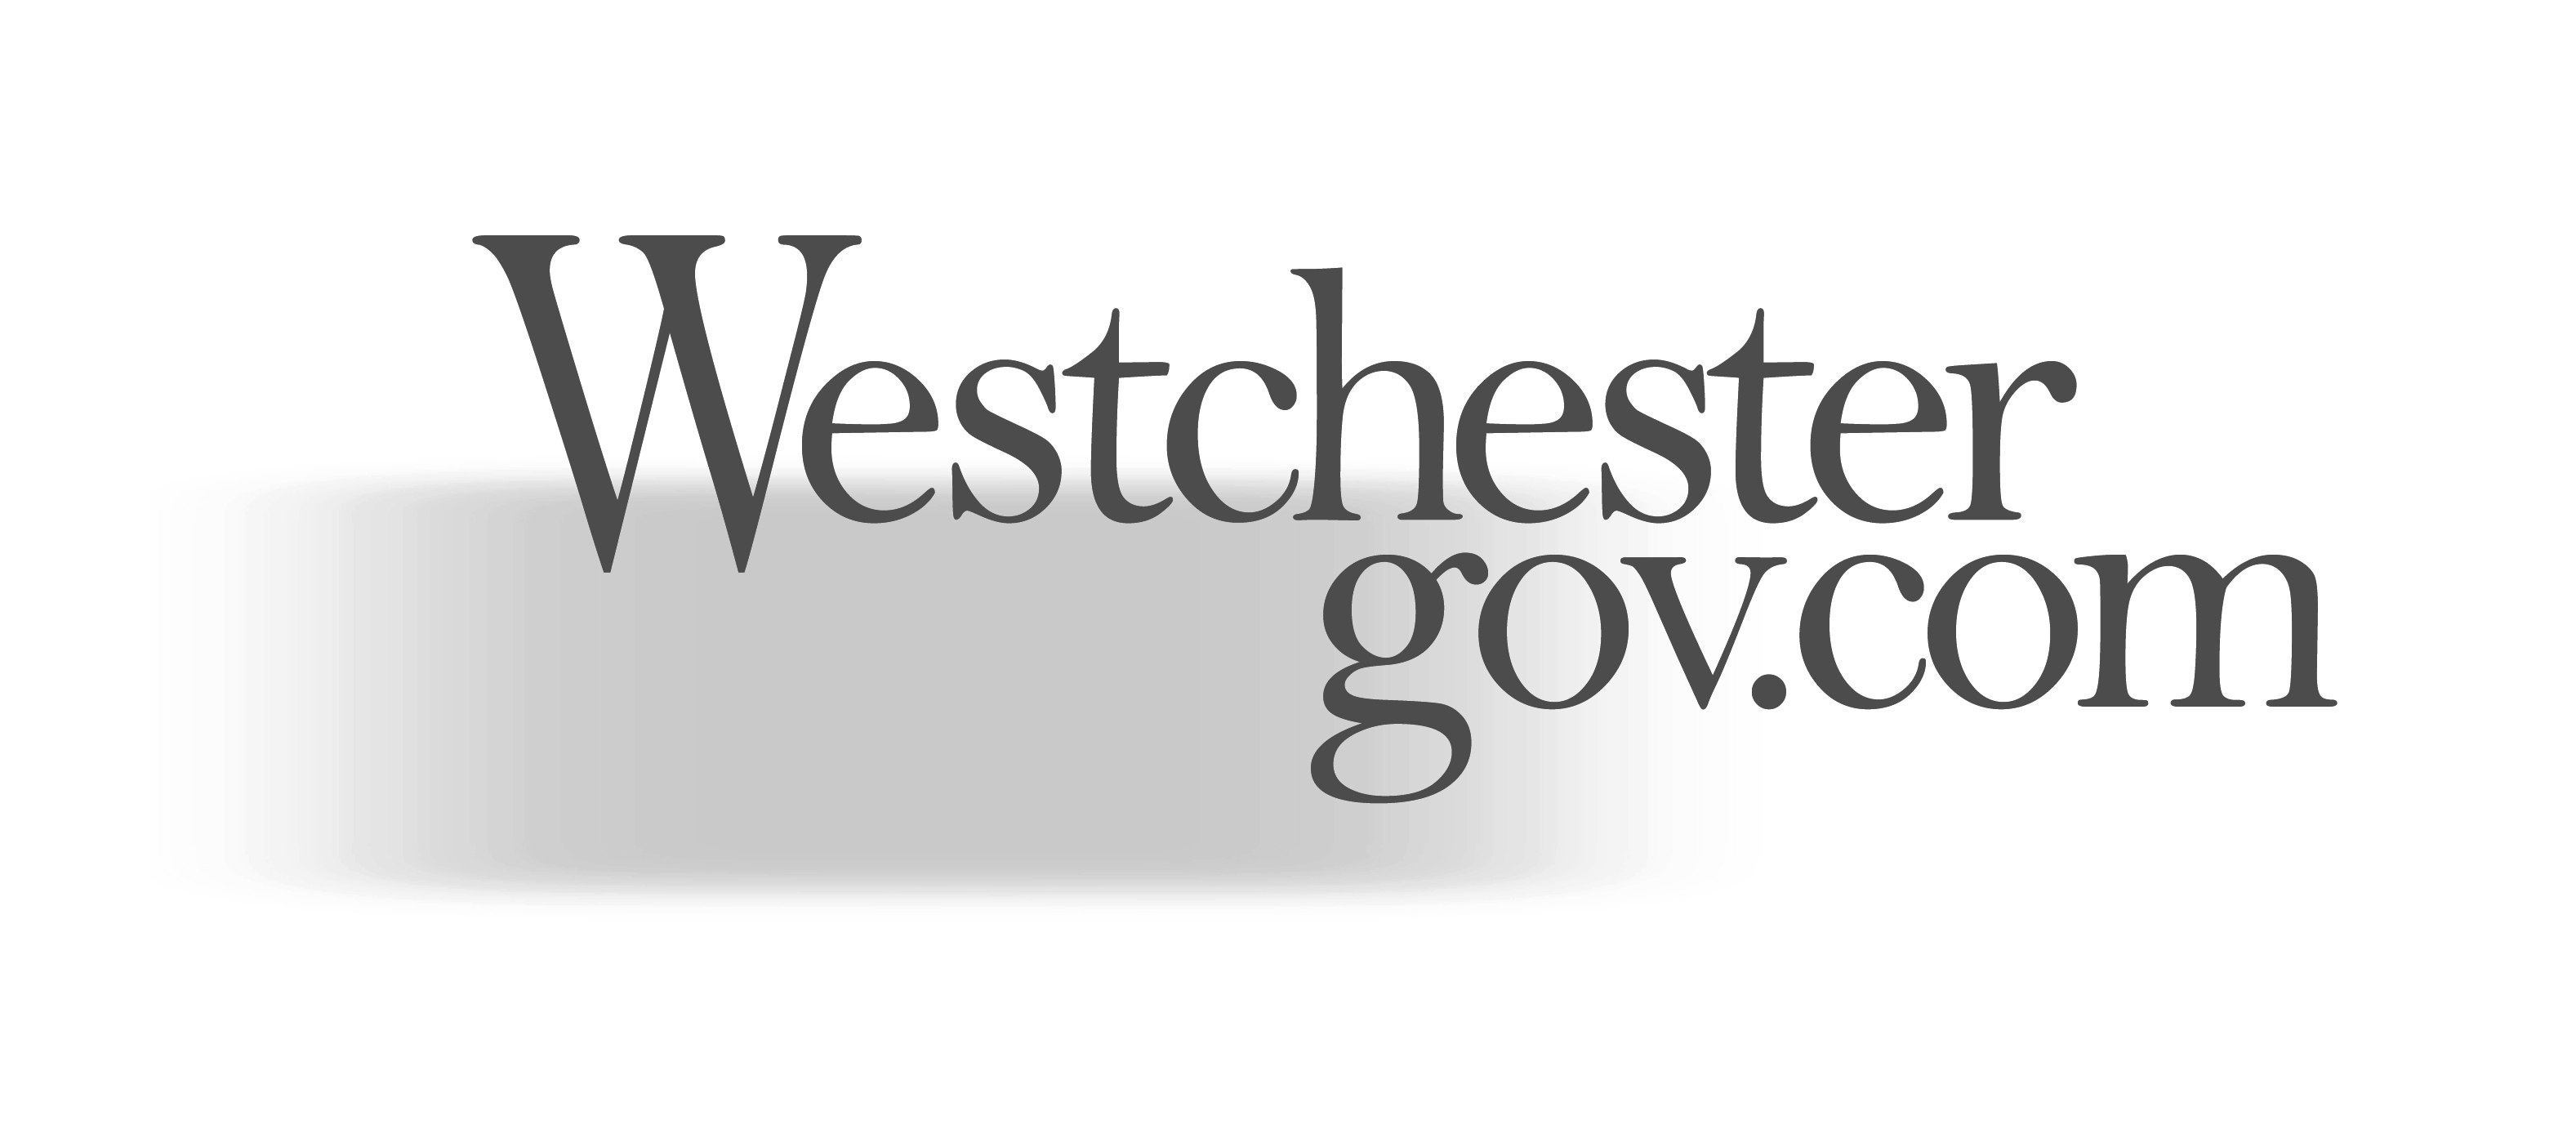 Westchester County Logo